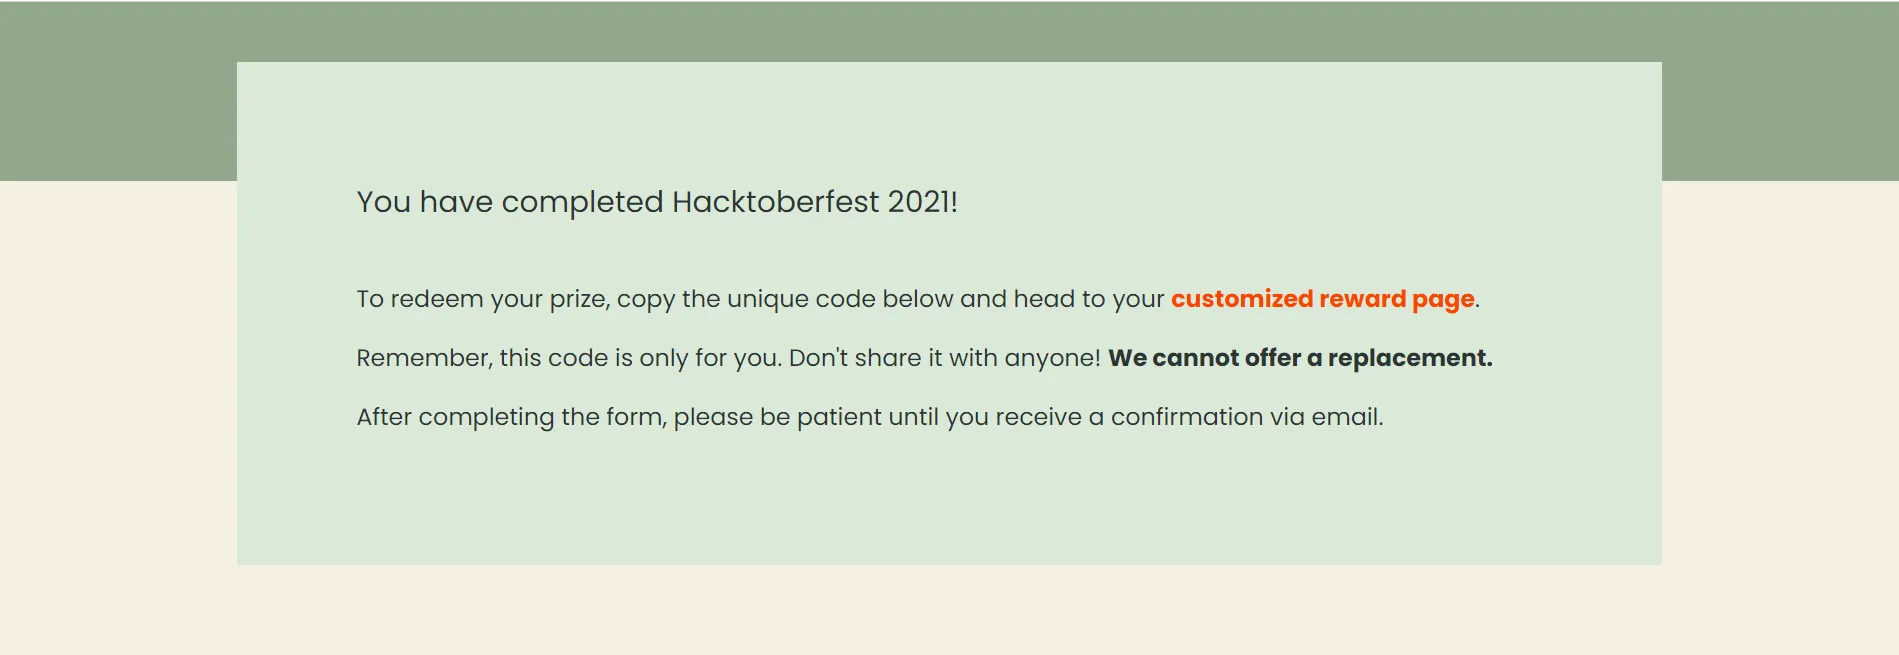 Hacktoberfest completement announcement